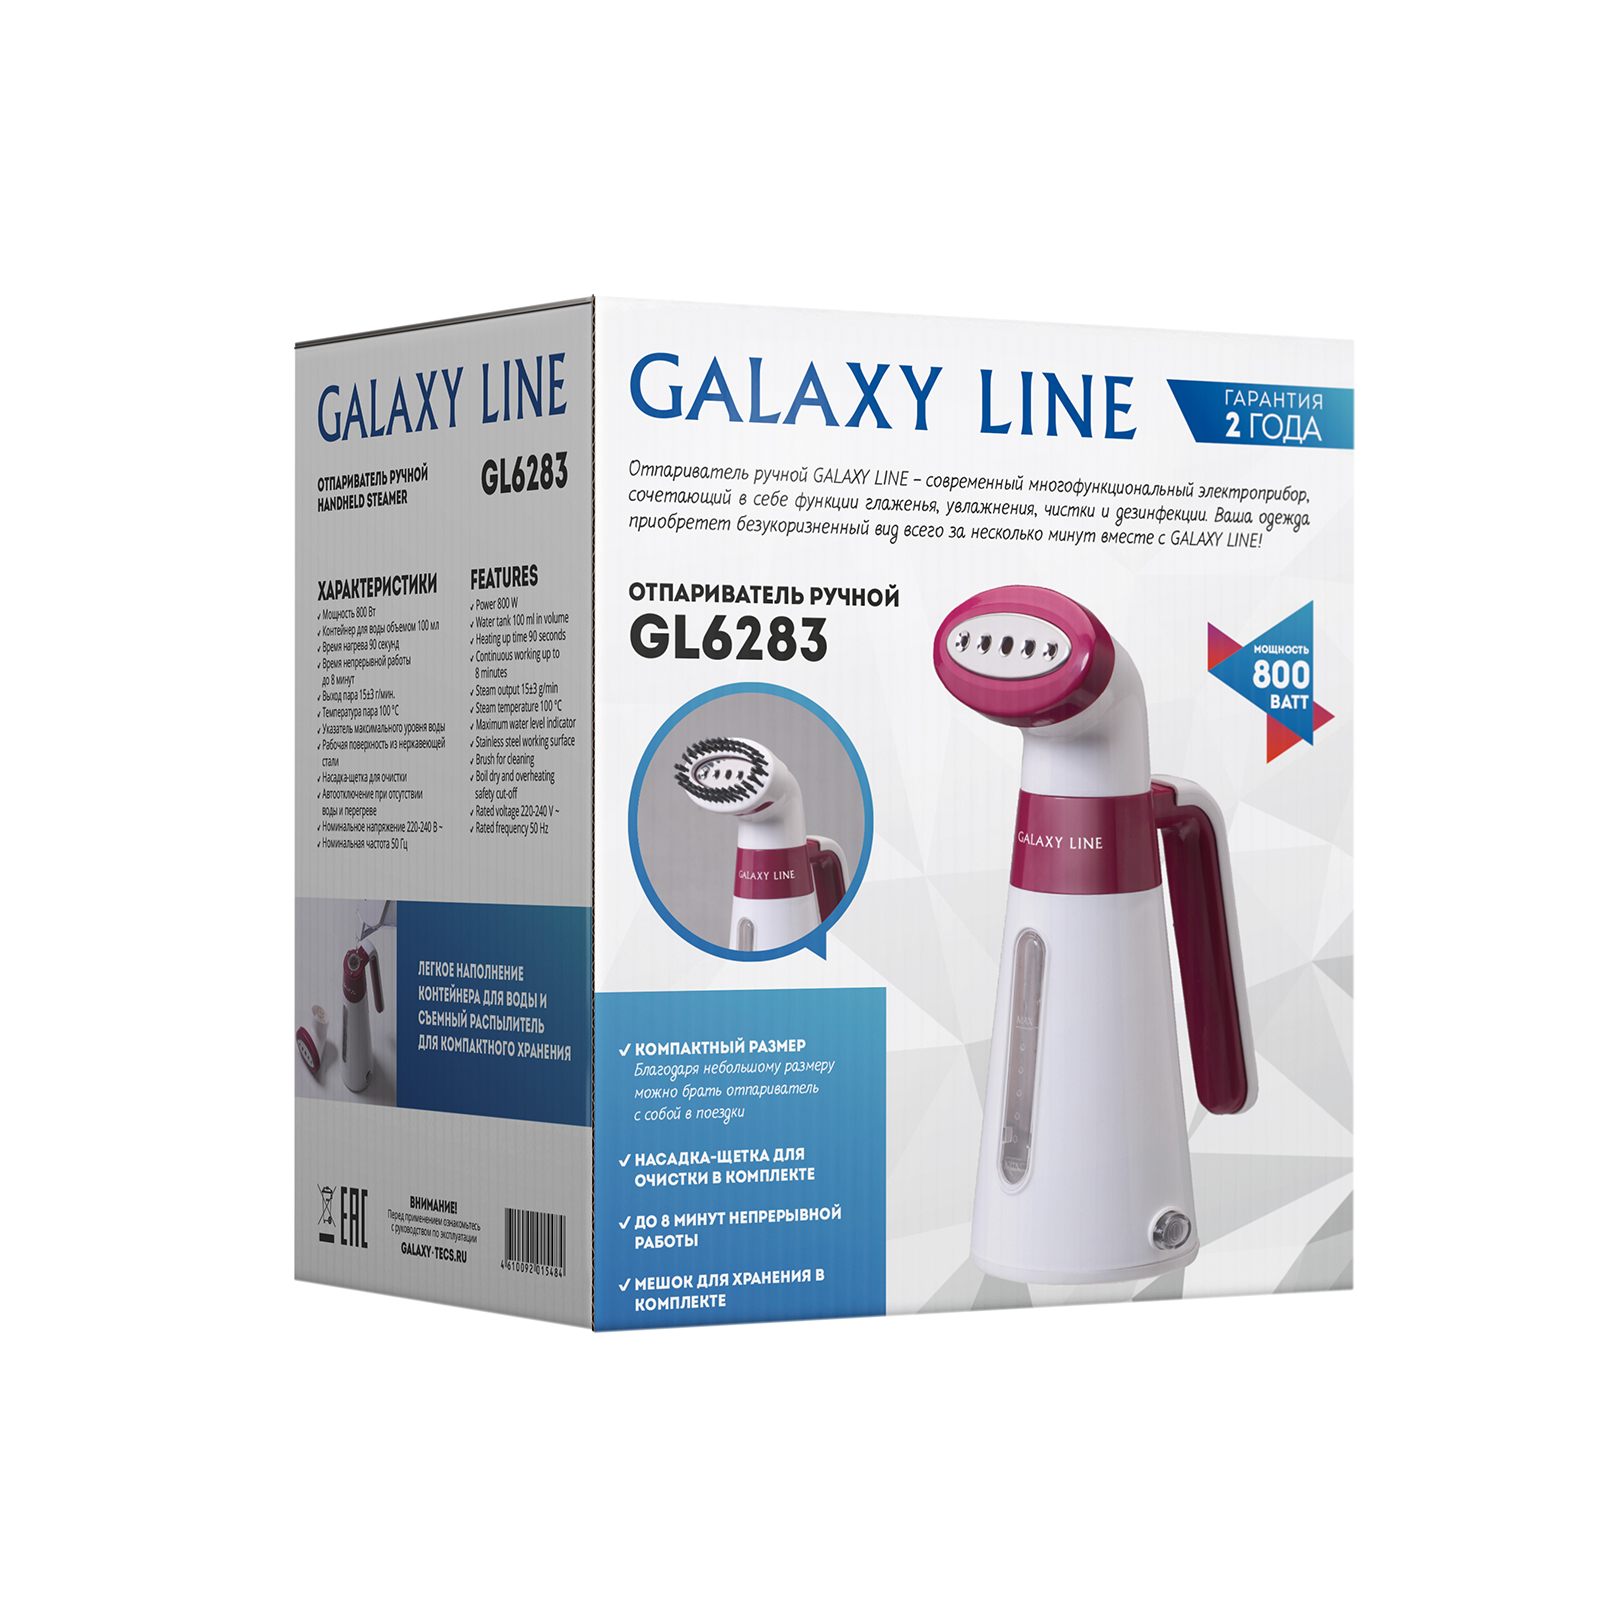 Отпариватель GALAXY LINE GL 6283 Казахстан